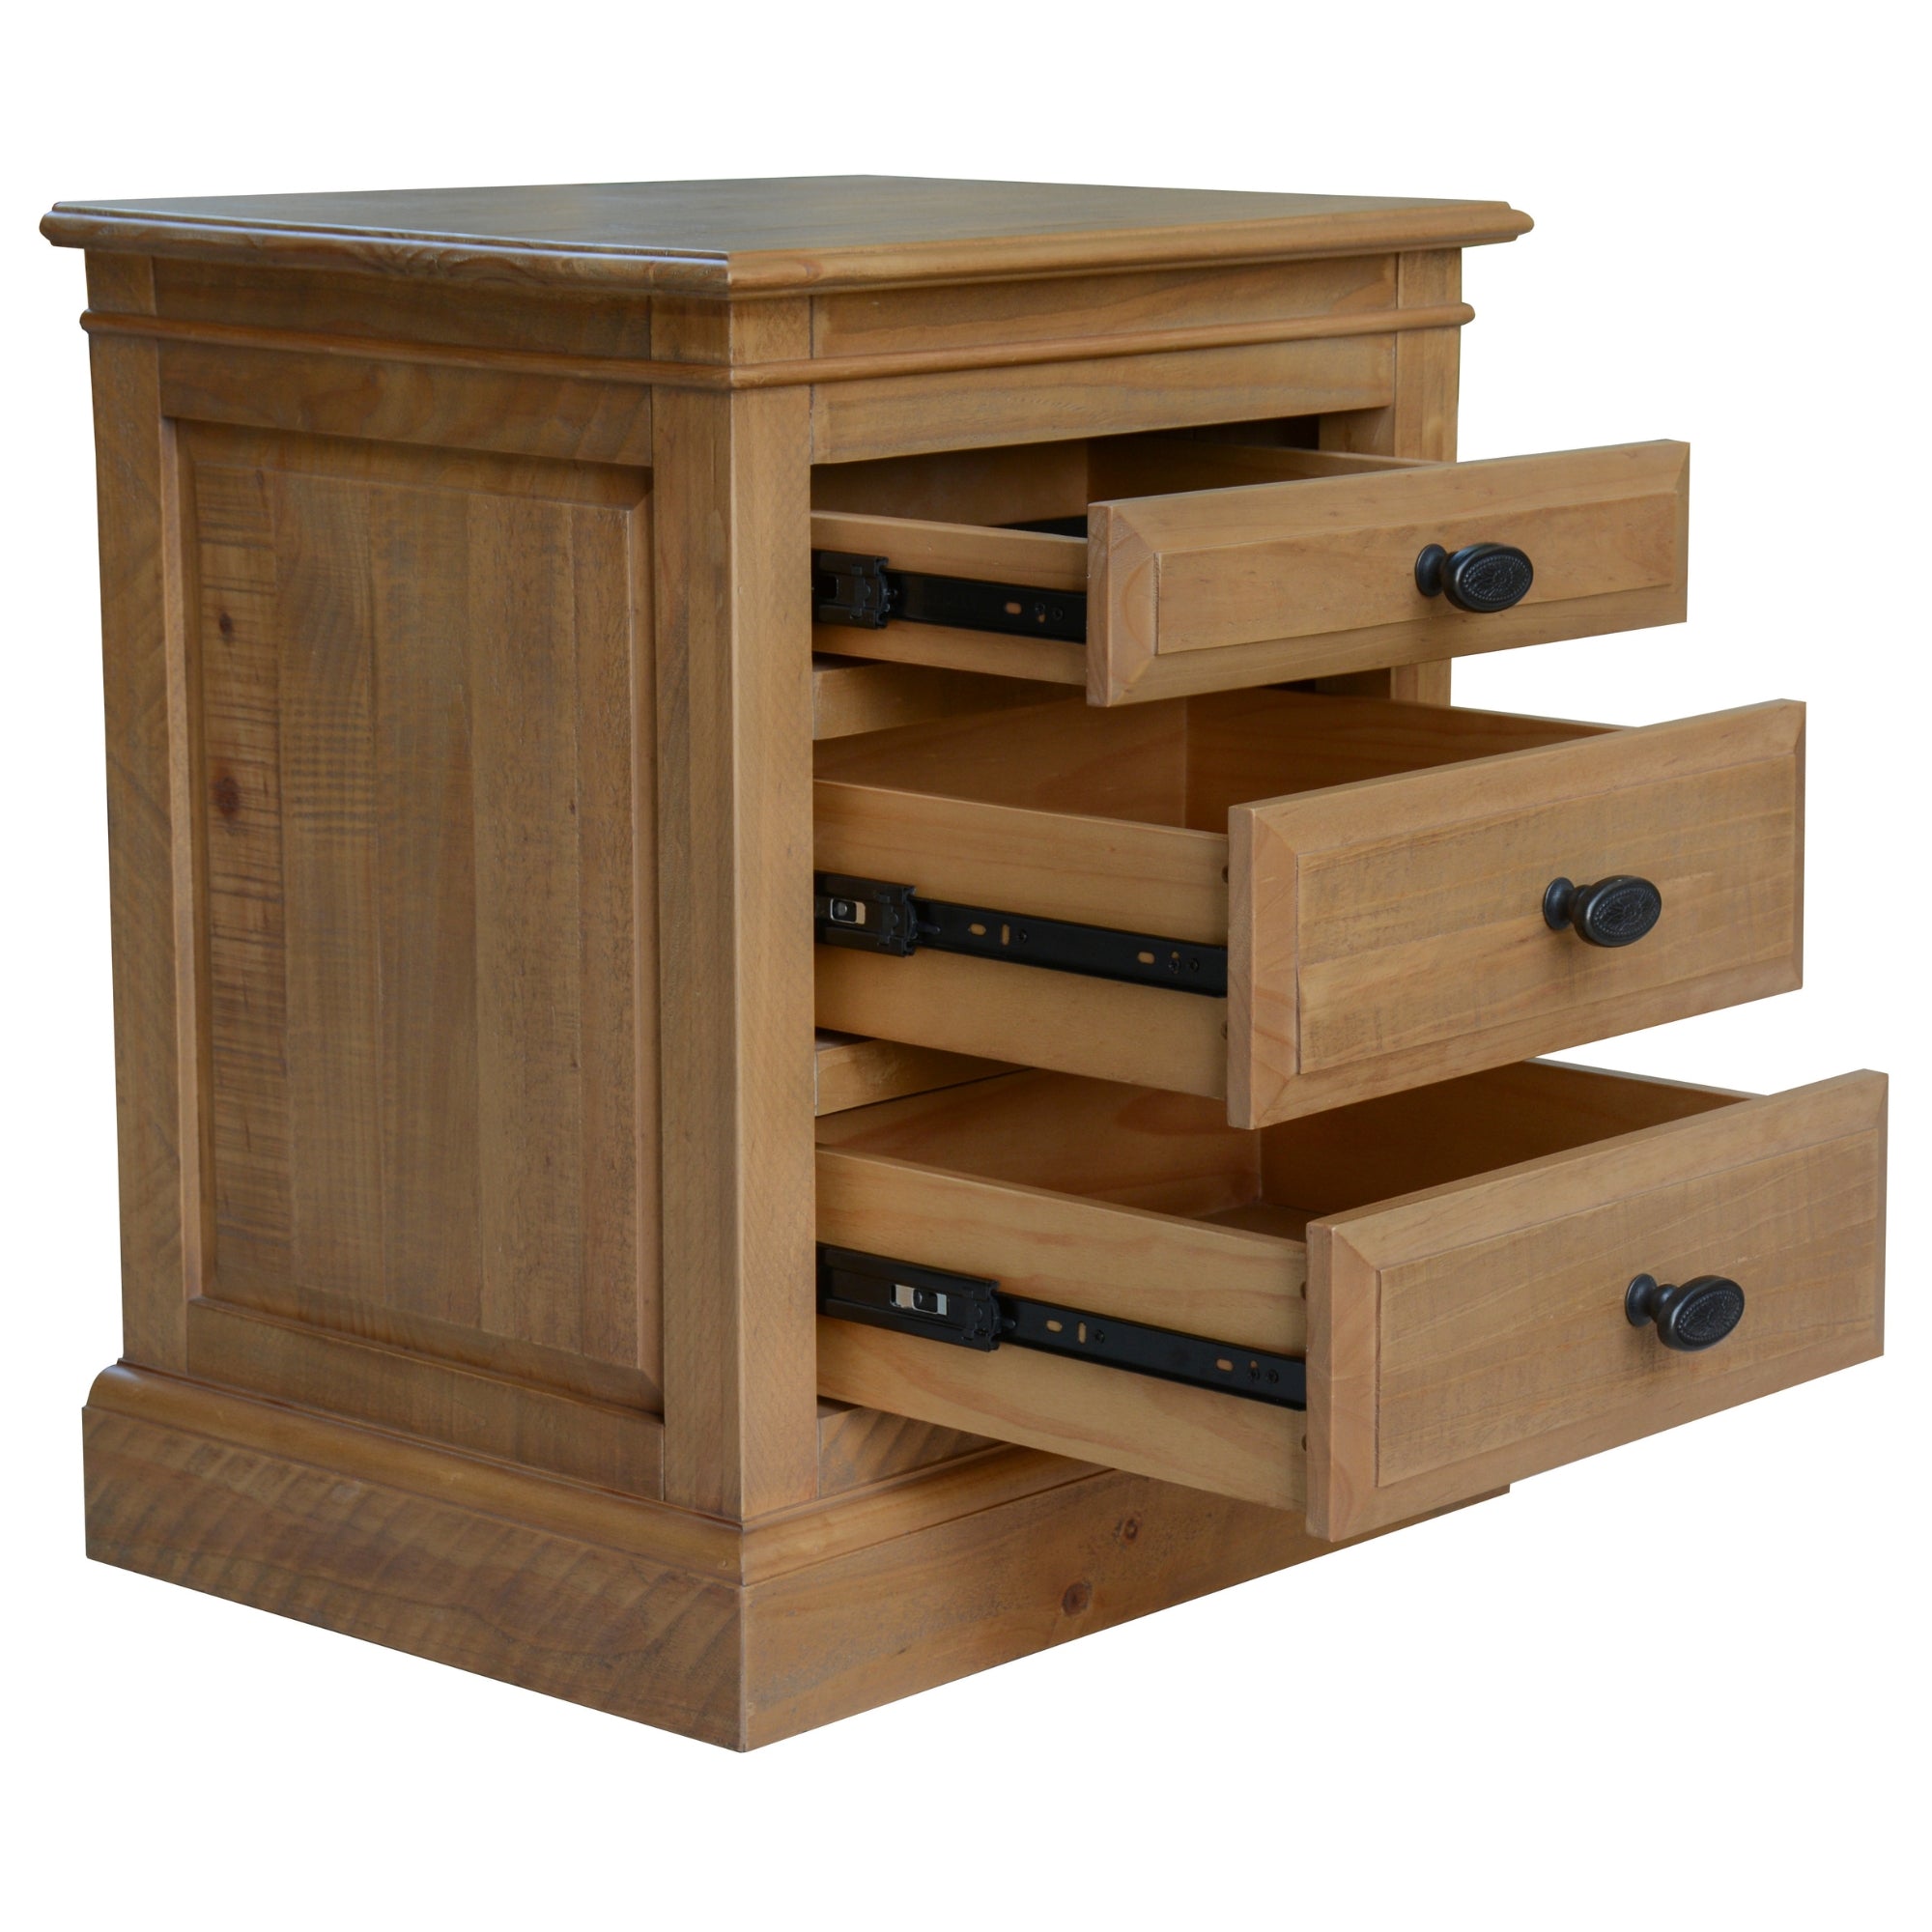 Rustic Pine Wood Bedside Tables Set, 3 Drawers - Jade